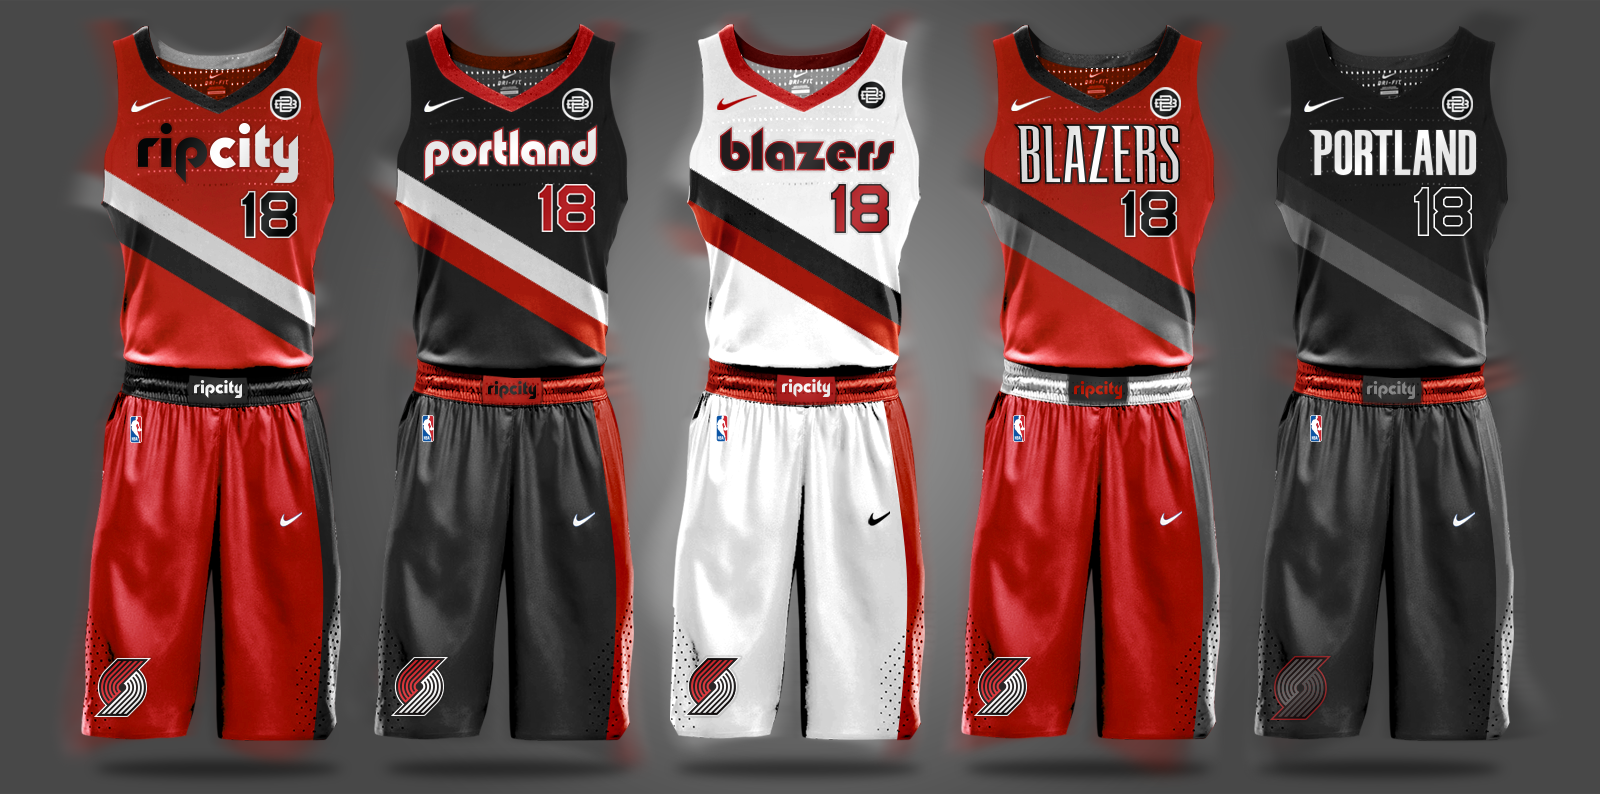 Uni Watch - Portland Trail Blazers redesign ideas - ESPN